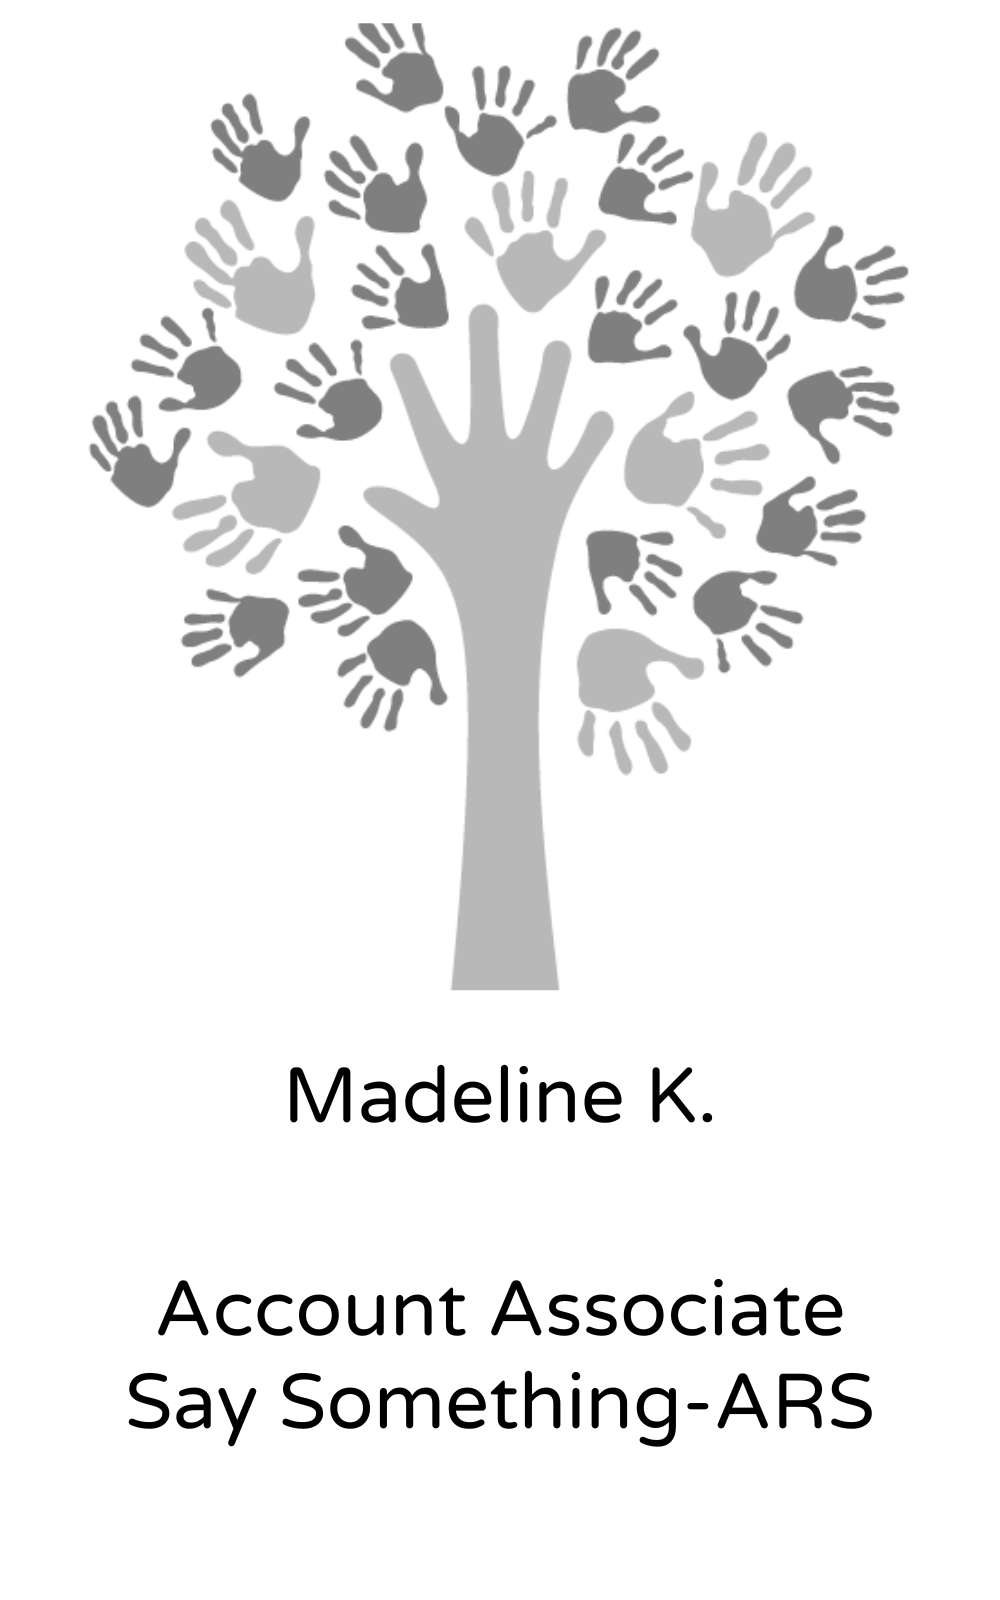 Madeline K., Account Associate, Say Something-ARS